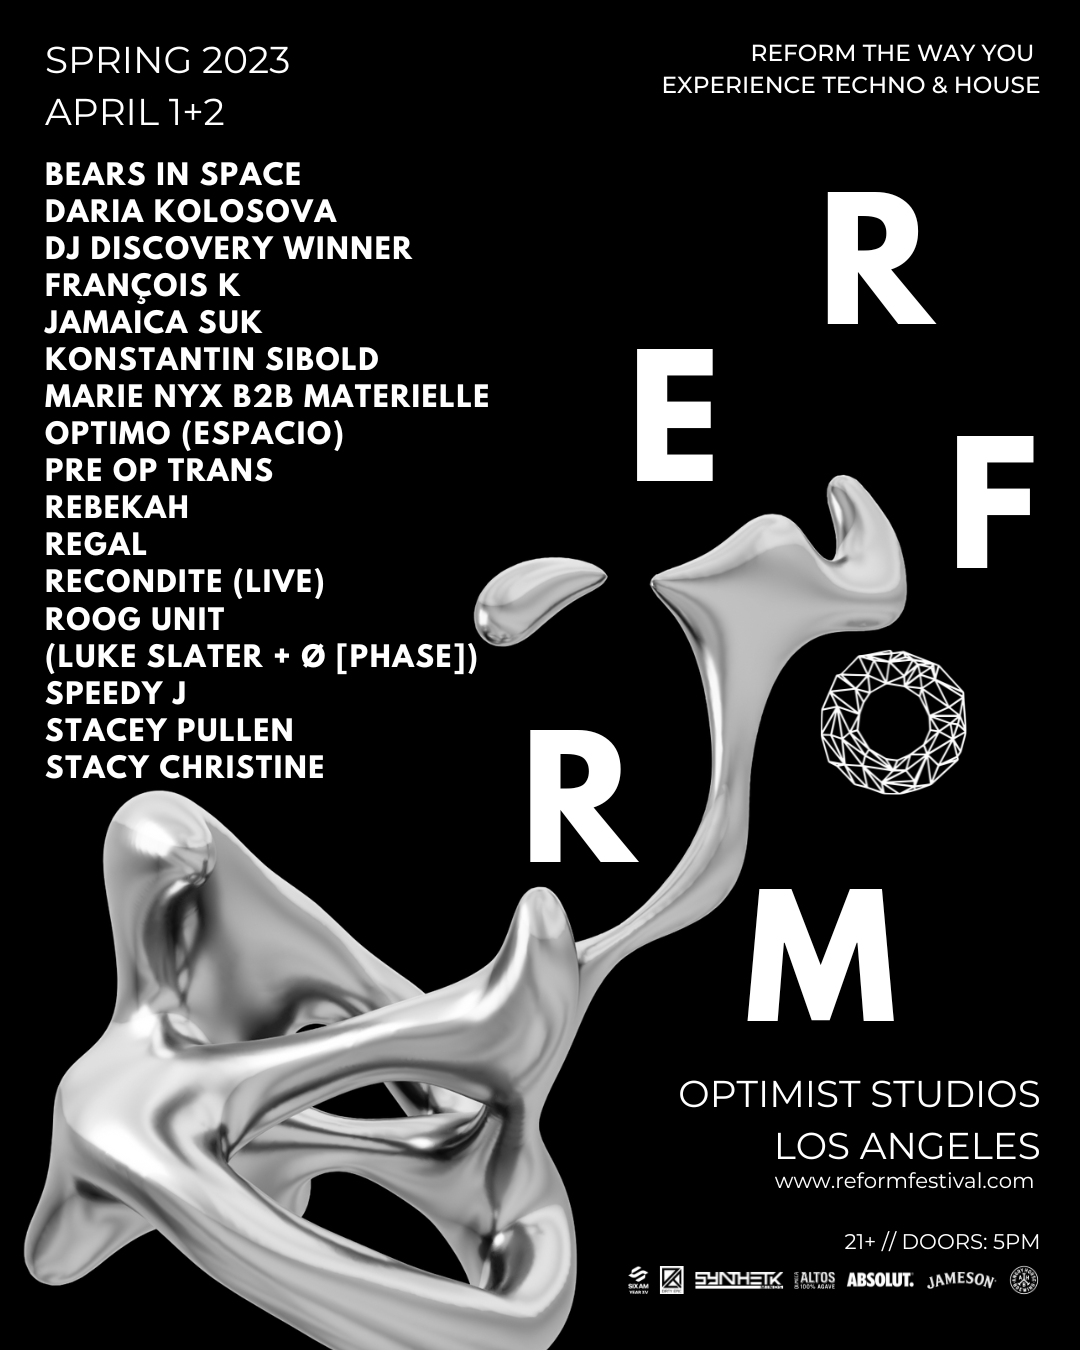 RE/FORM Spring 2023: Luke Slater B2B Ø [Phase], Rebekah, Regal, Recondite, Speedy J & More